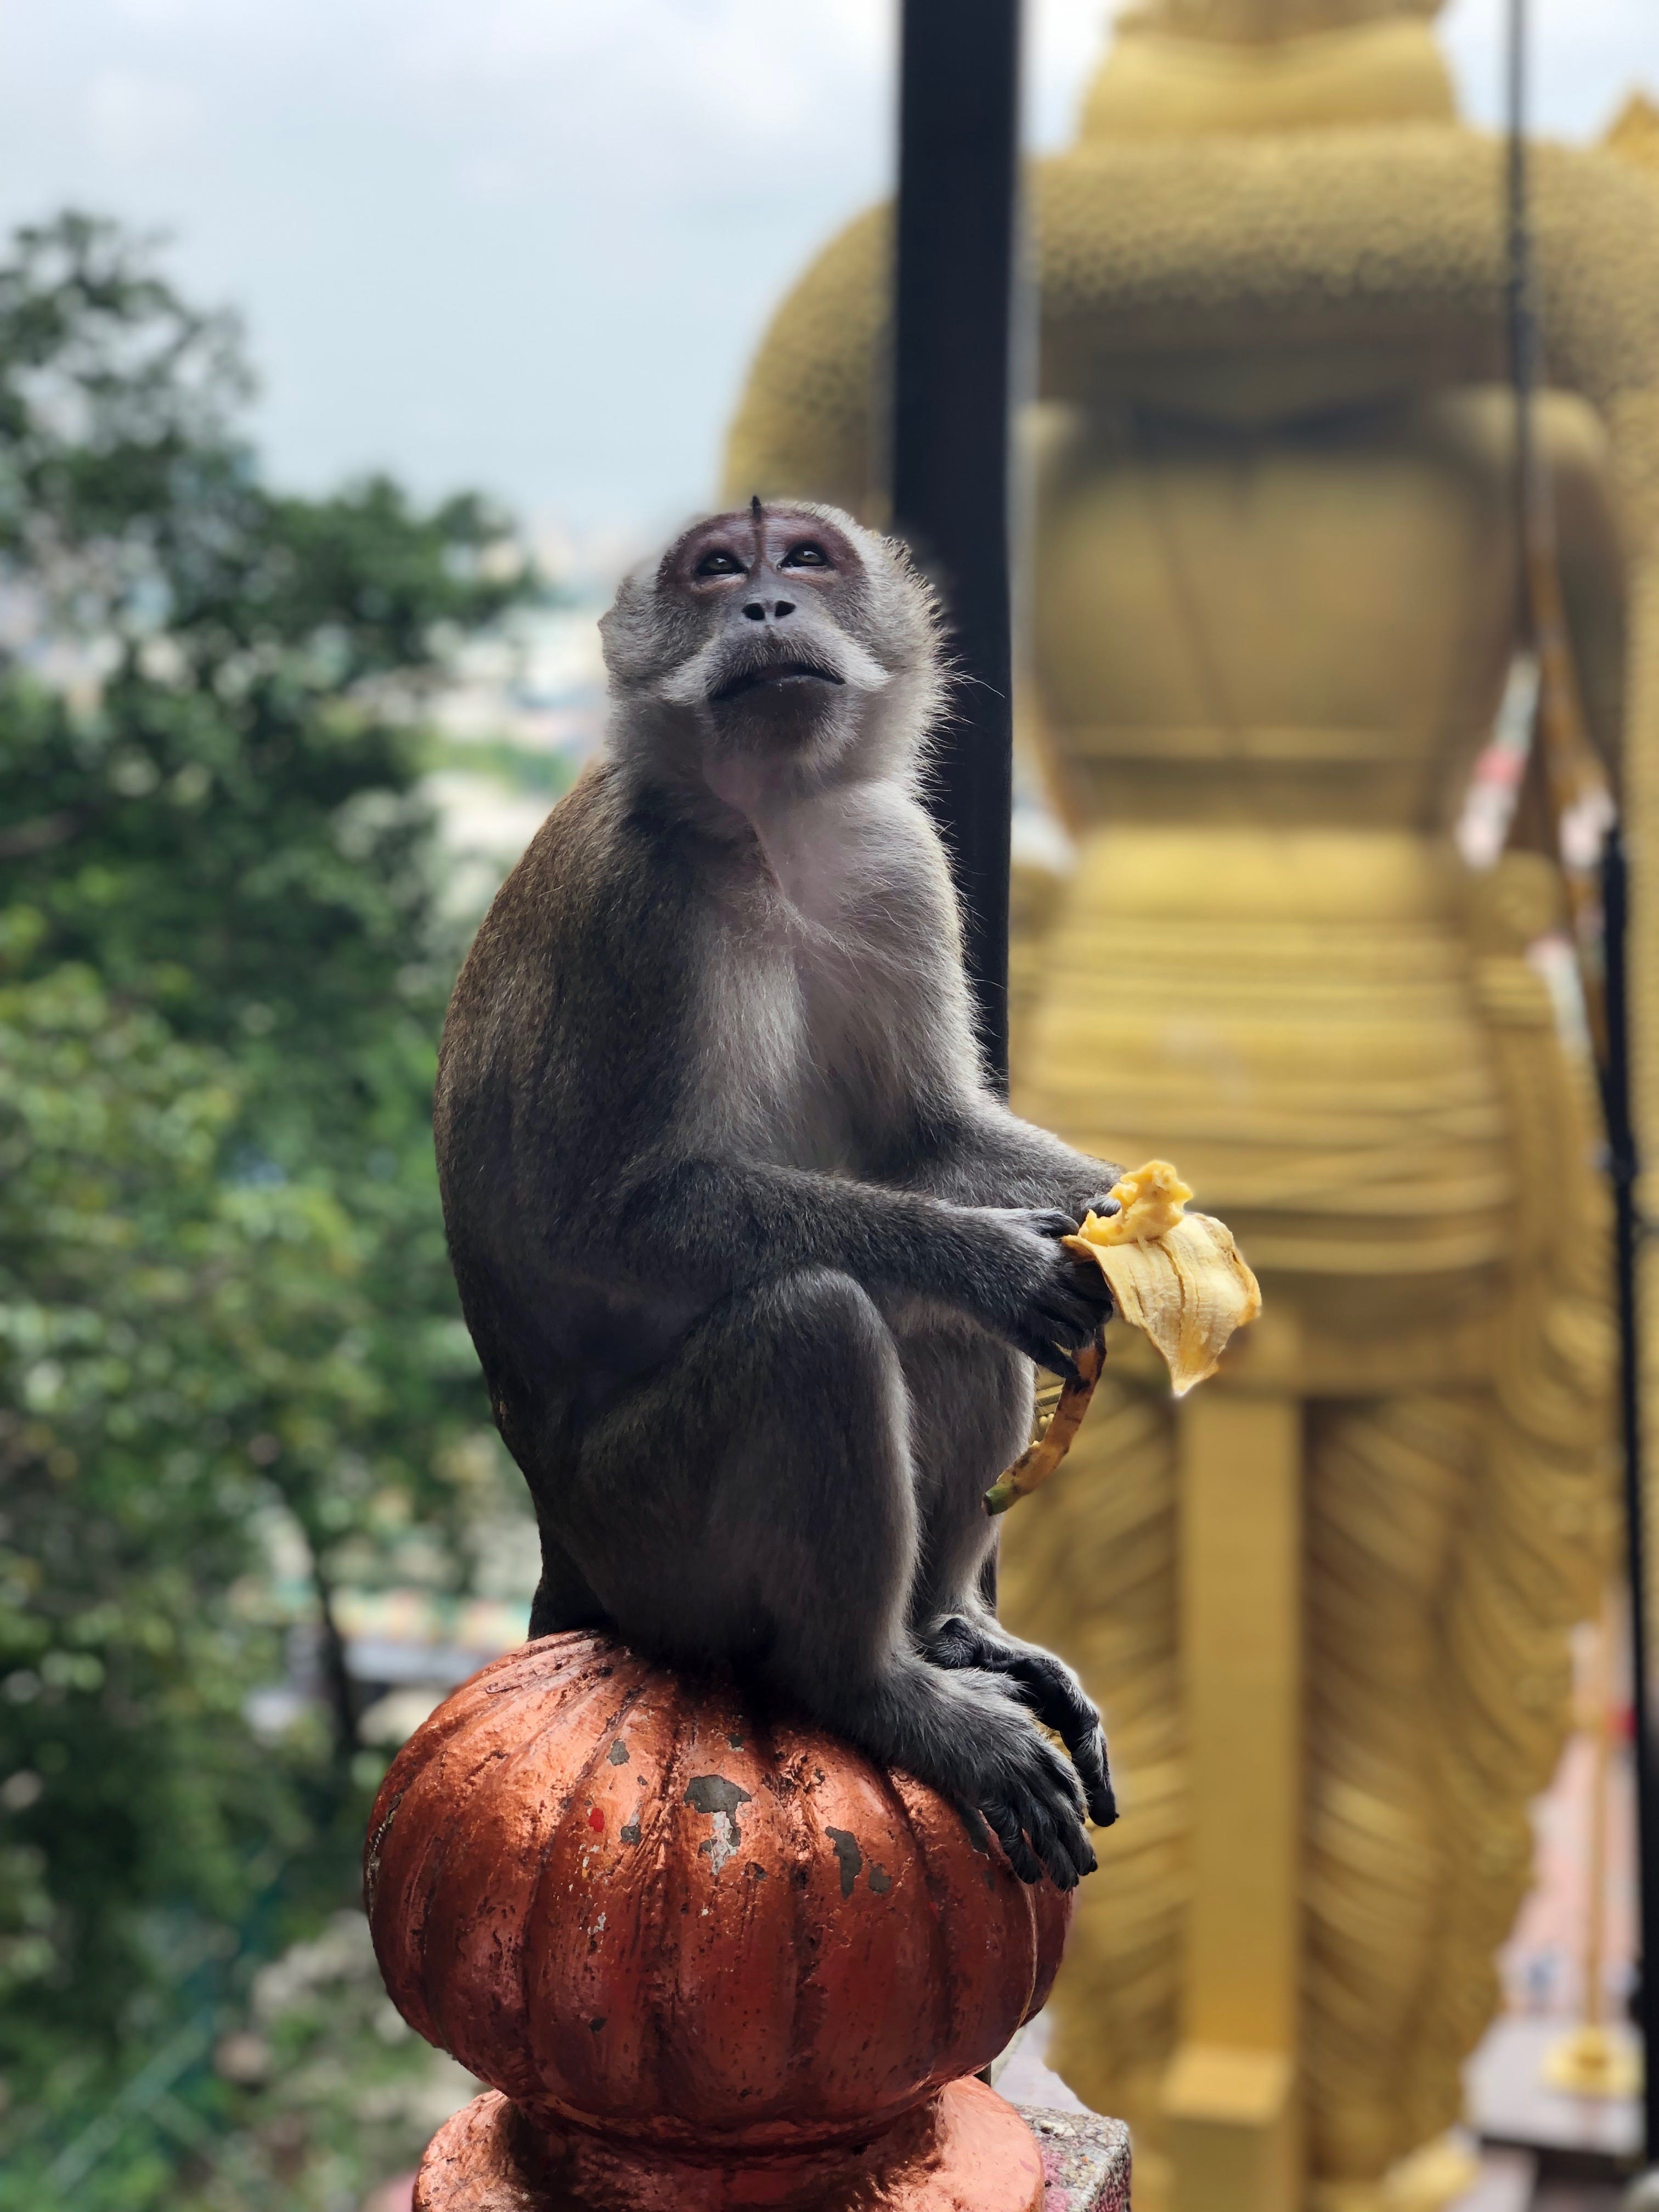 Monkey just chilling eating a banana